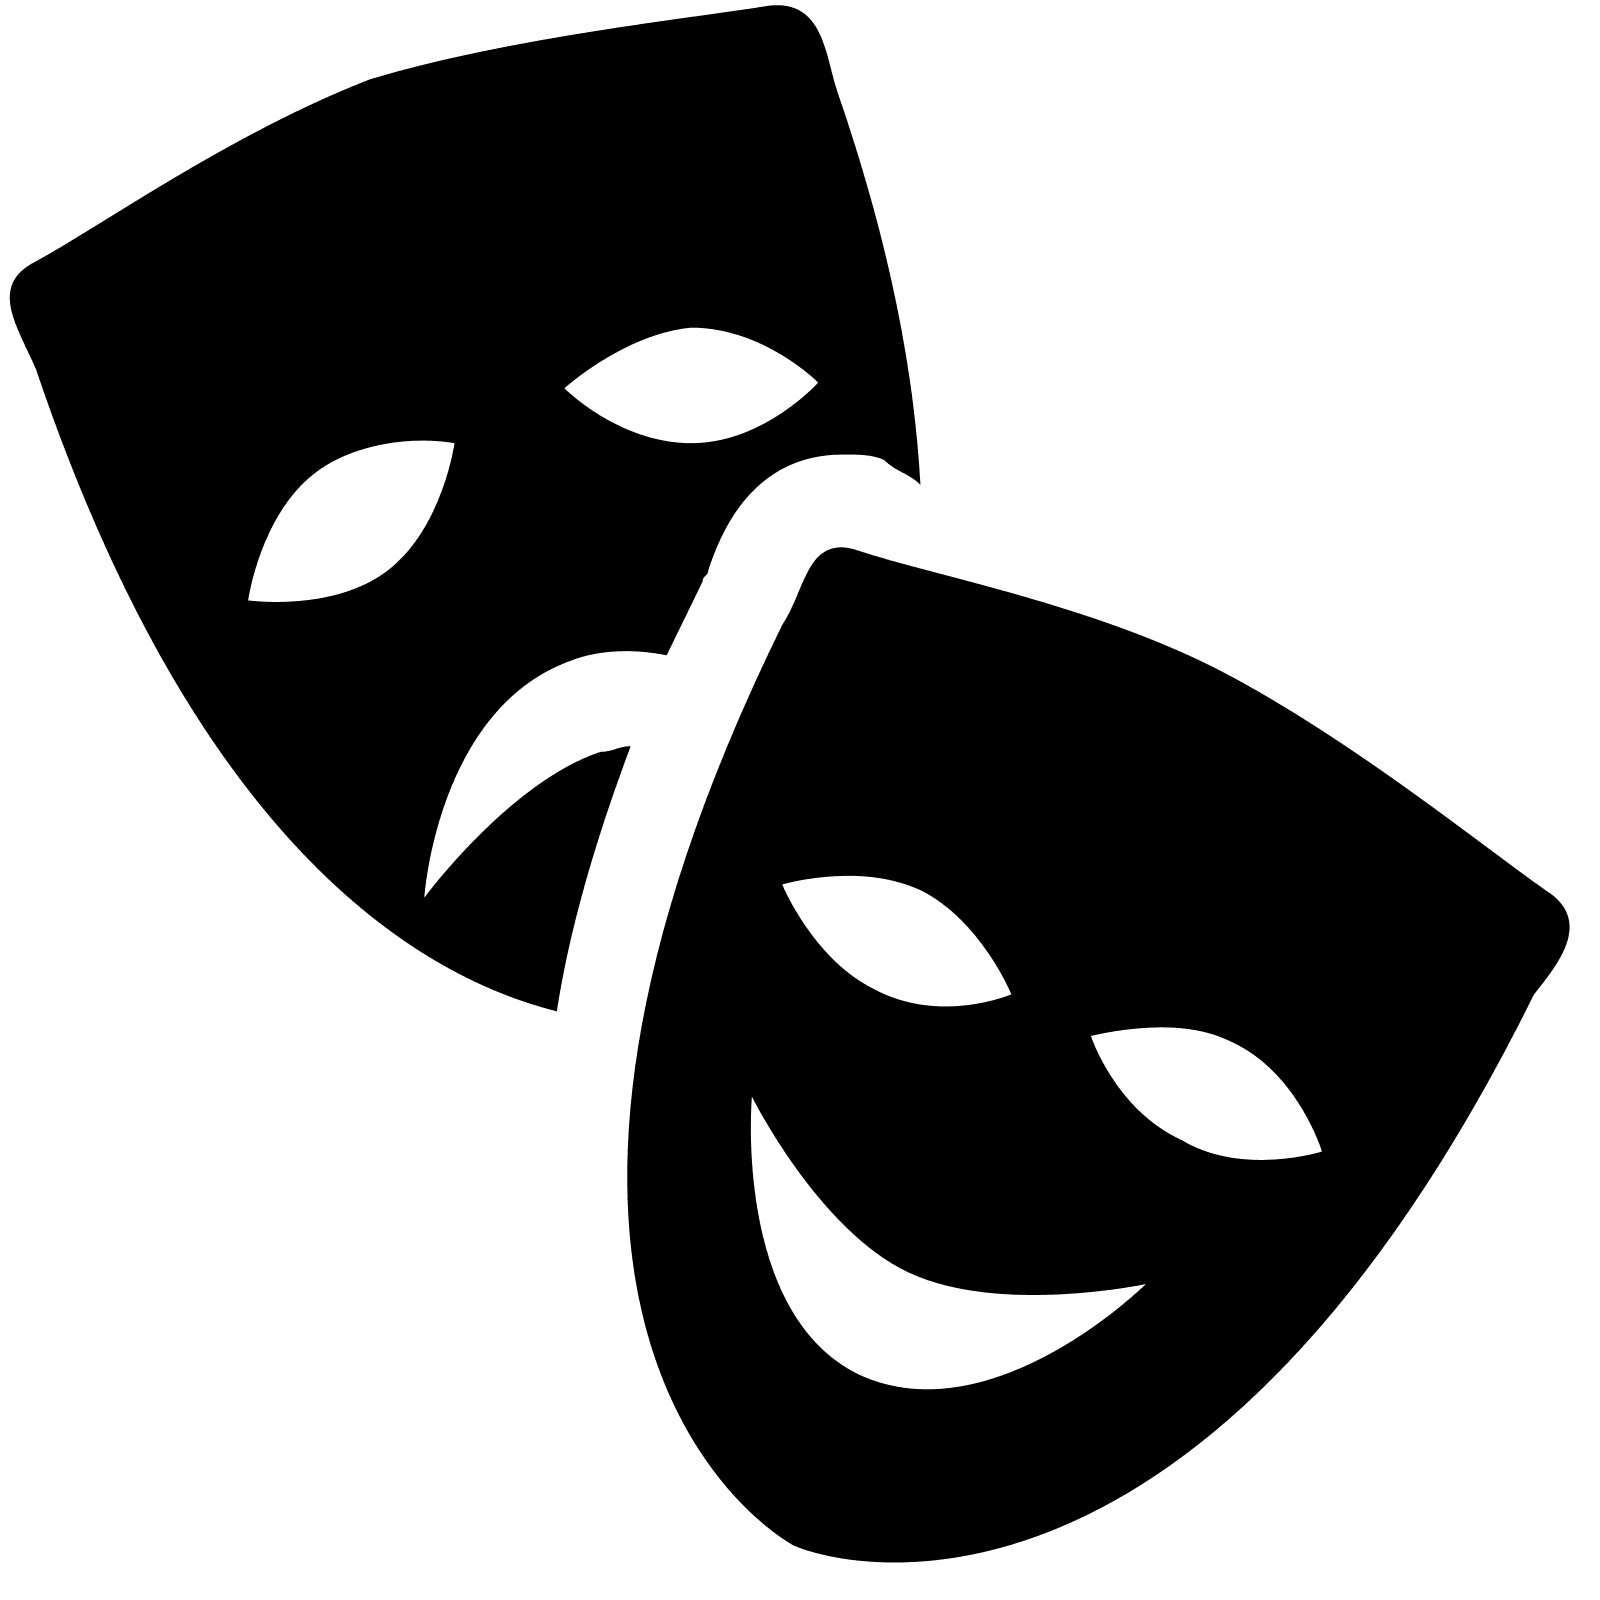 Theatre Masks Png